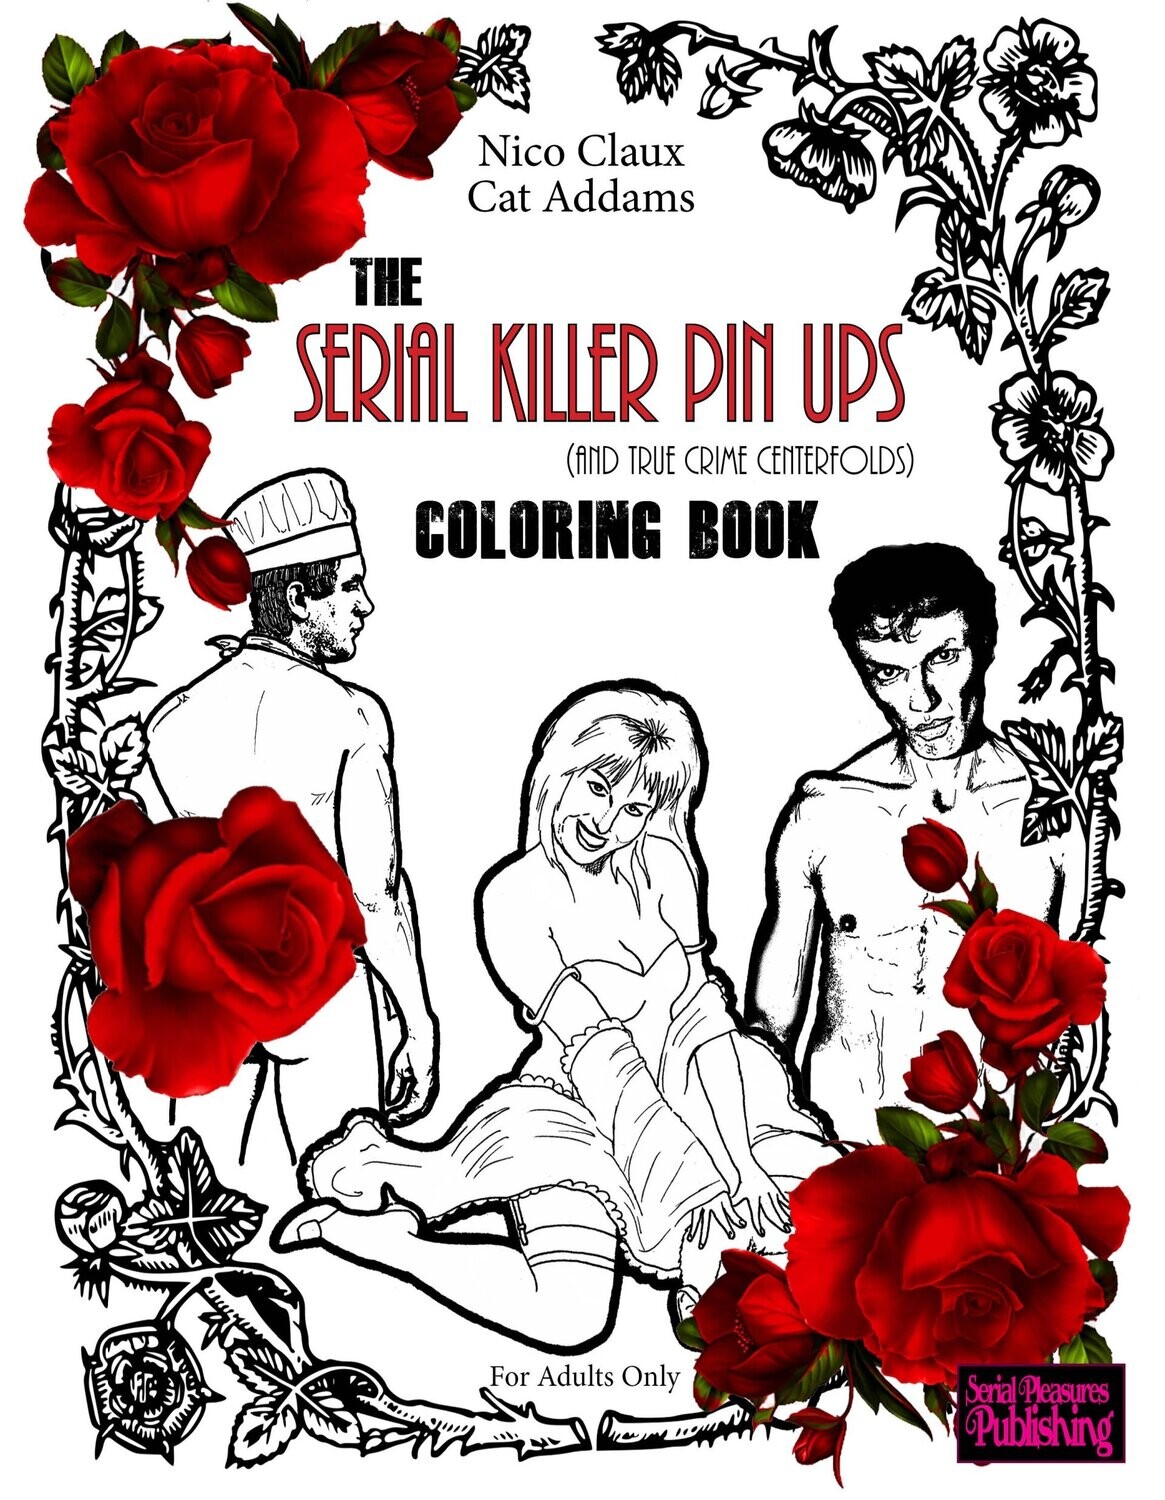 The Serial Killer Pin Ups Coloring Book (collector edition)